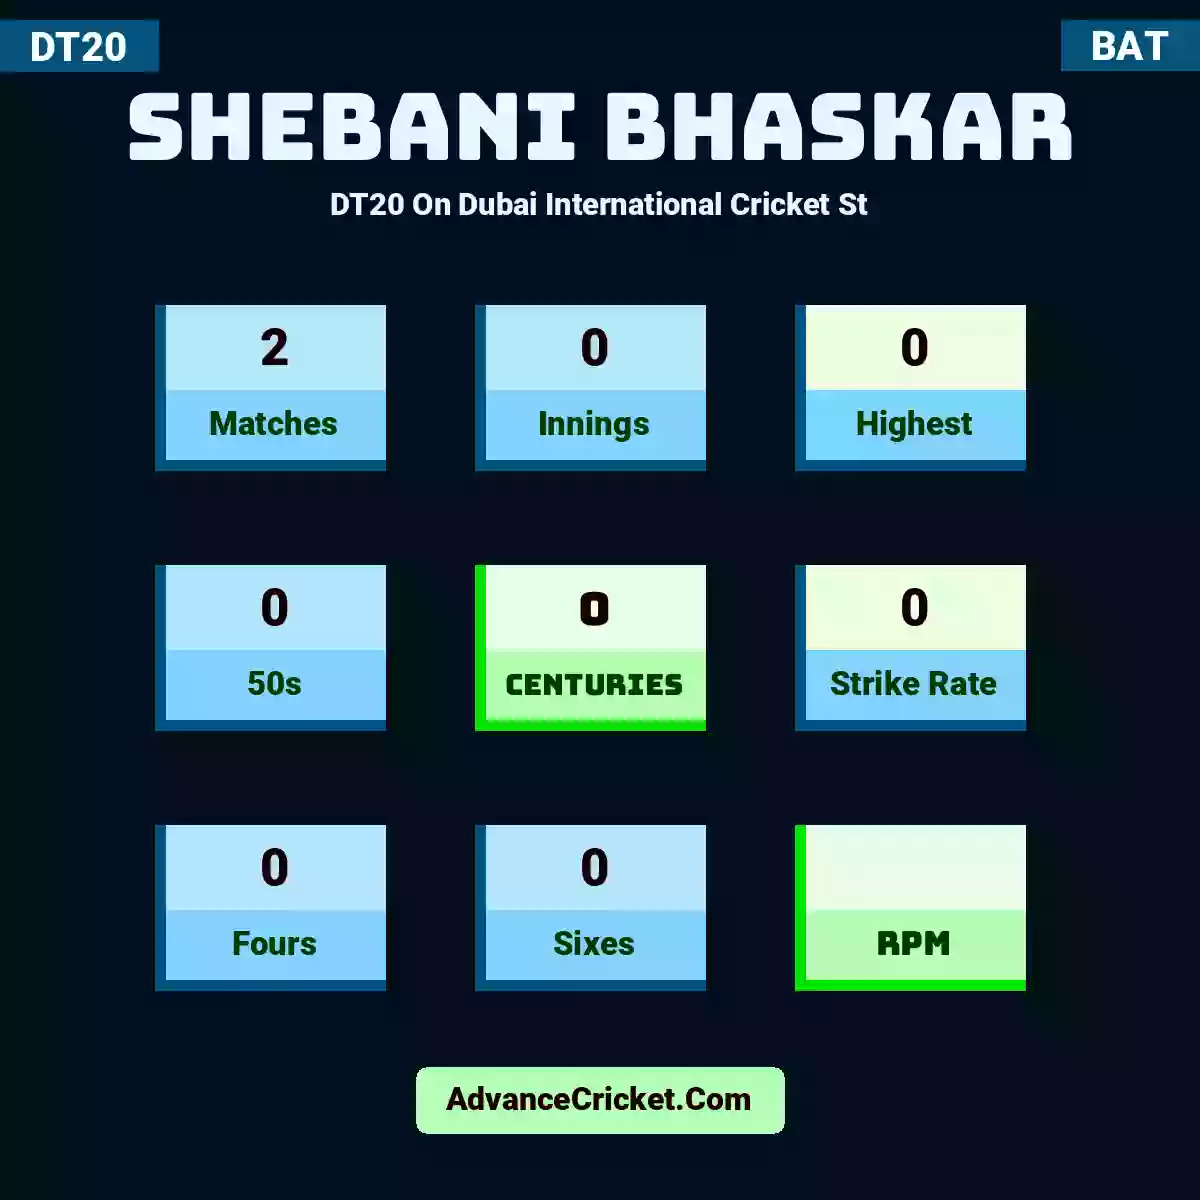 Shebani Bhaskar DT20  On Dubai International Cricket St, Shebani Bhaskar played 2 matches, scored 0 runs as highest, 0 half-centuries, and 0 centuries, with a strike rate of 0. S.Bhaskar hit 0 fours and 0 sixes.